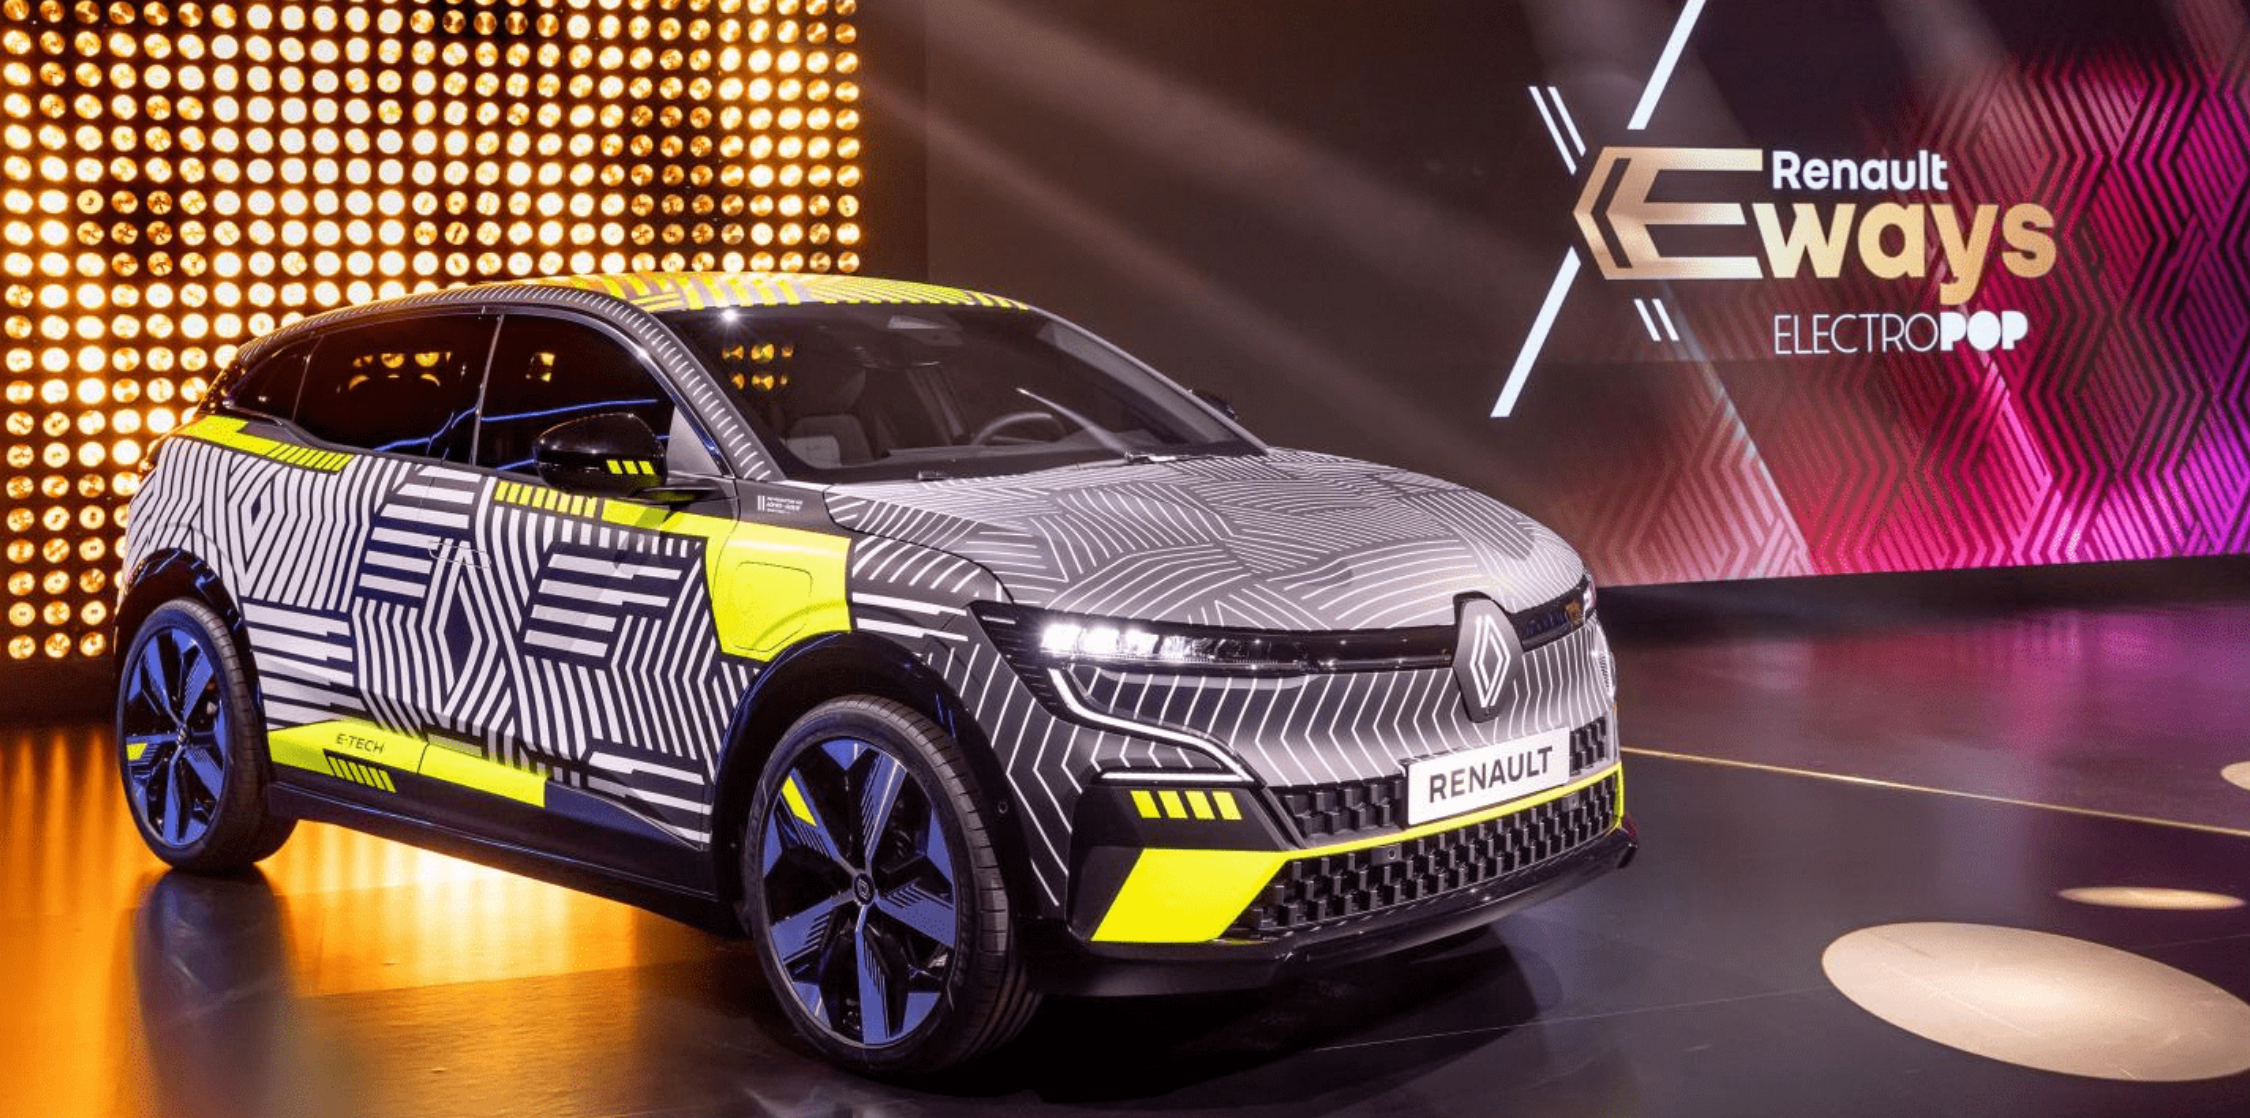 Renault presents a comprehensive EV strategy